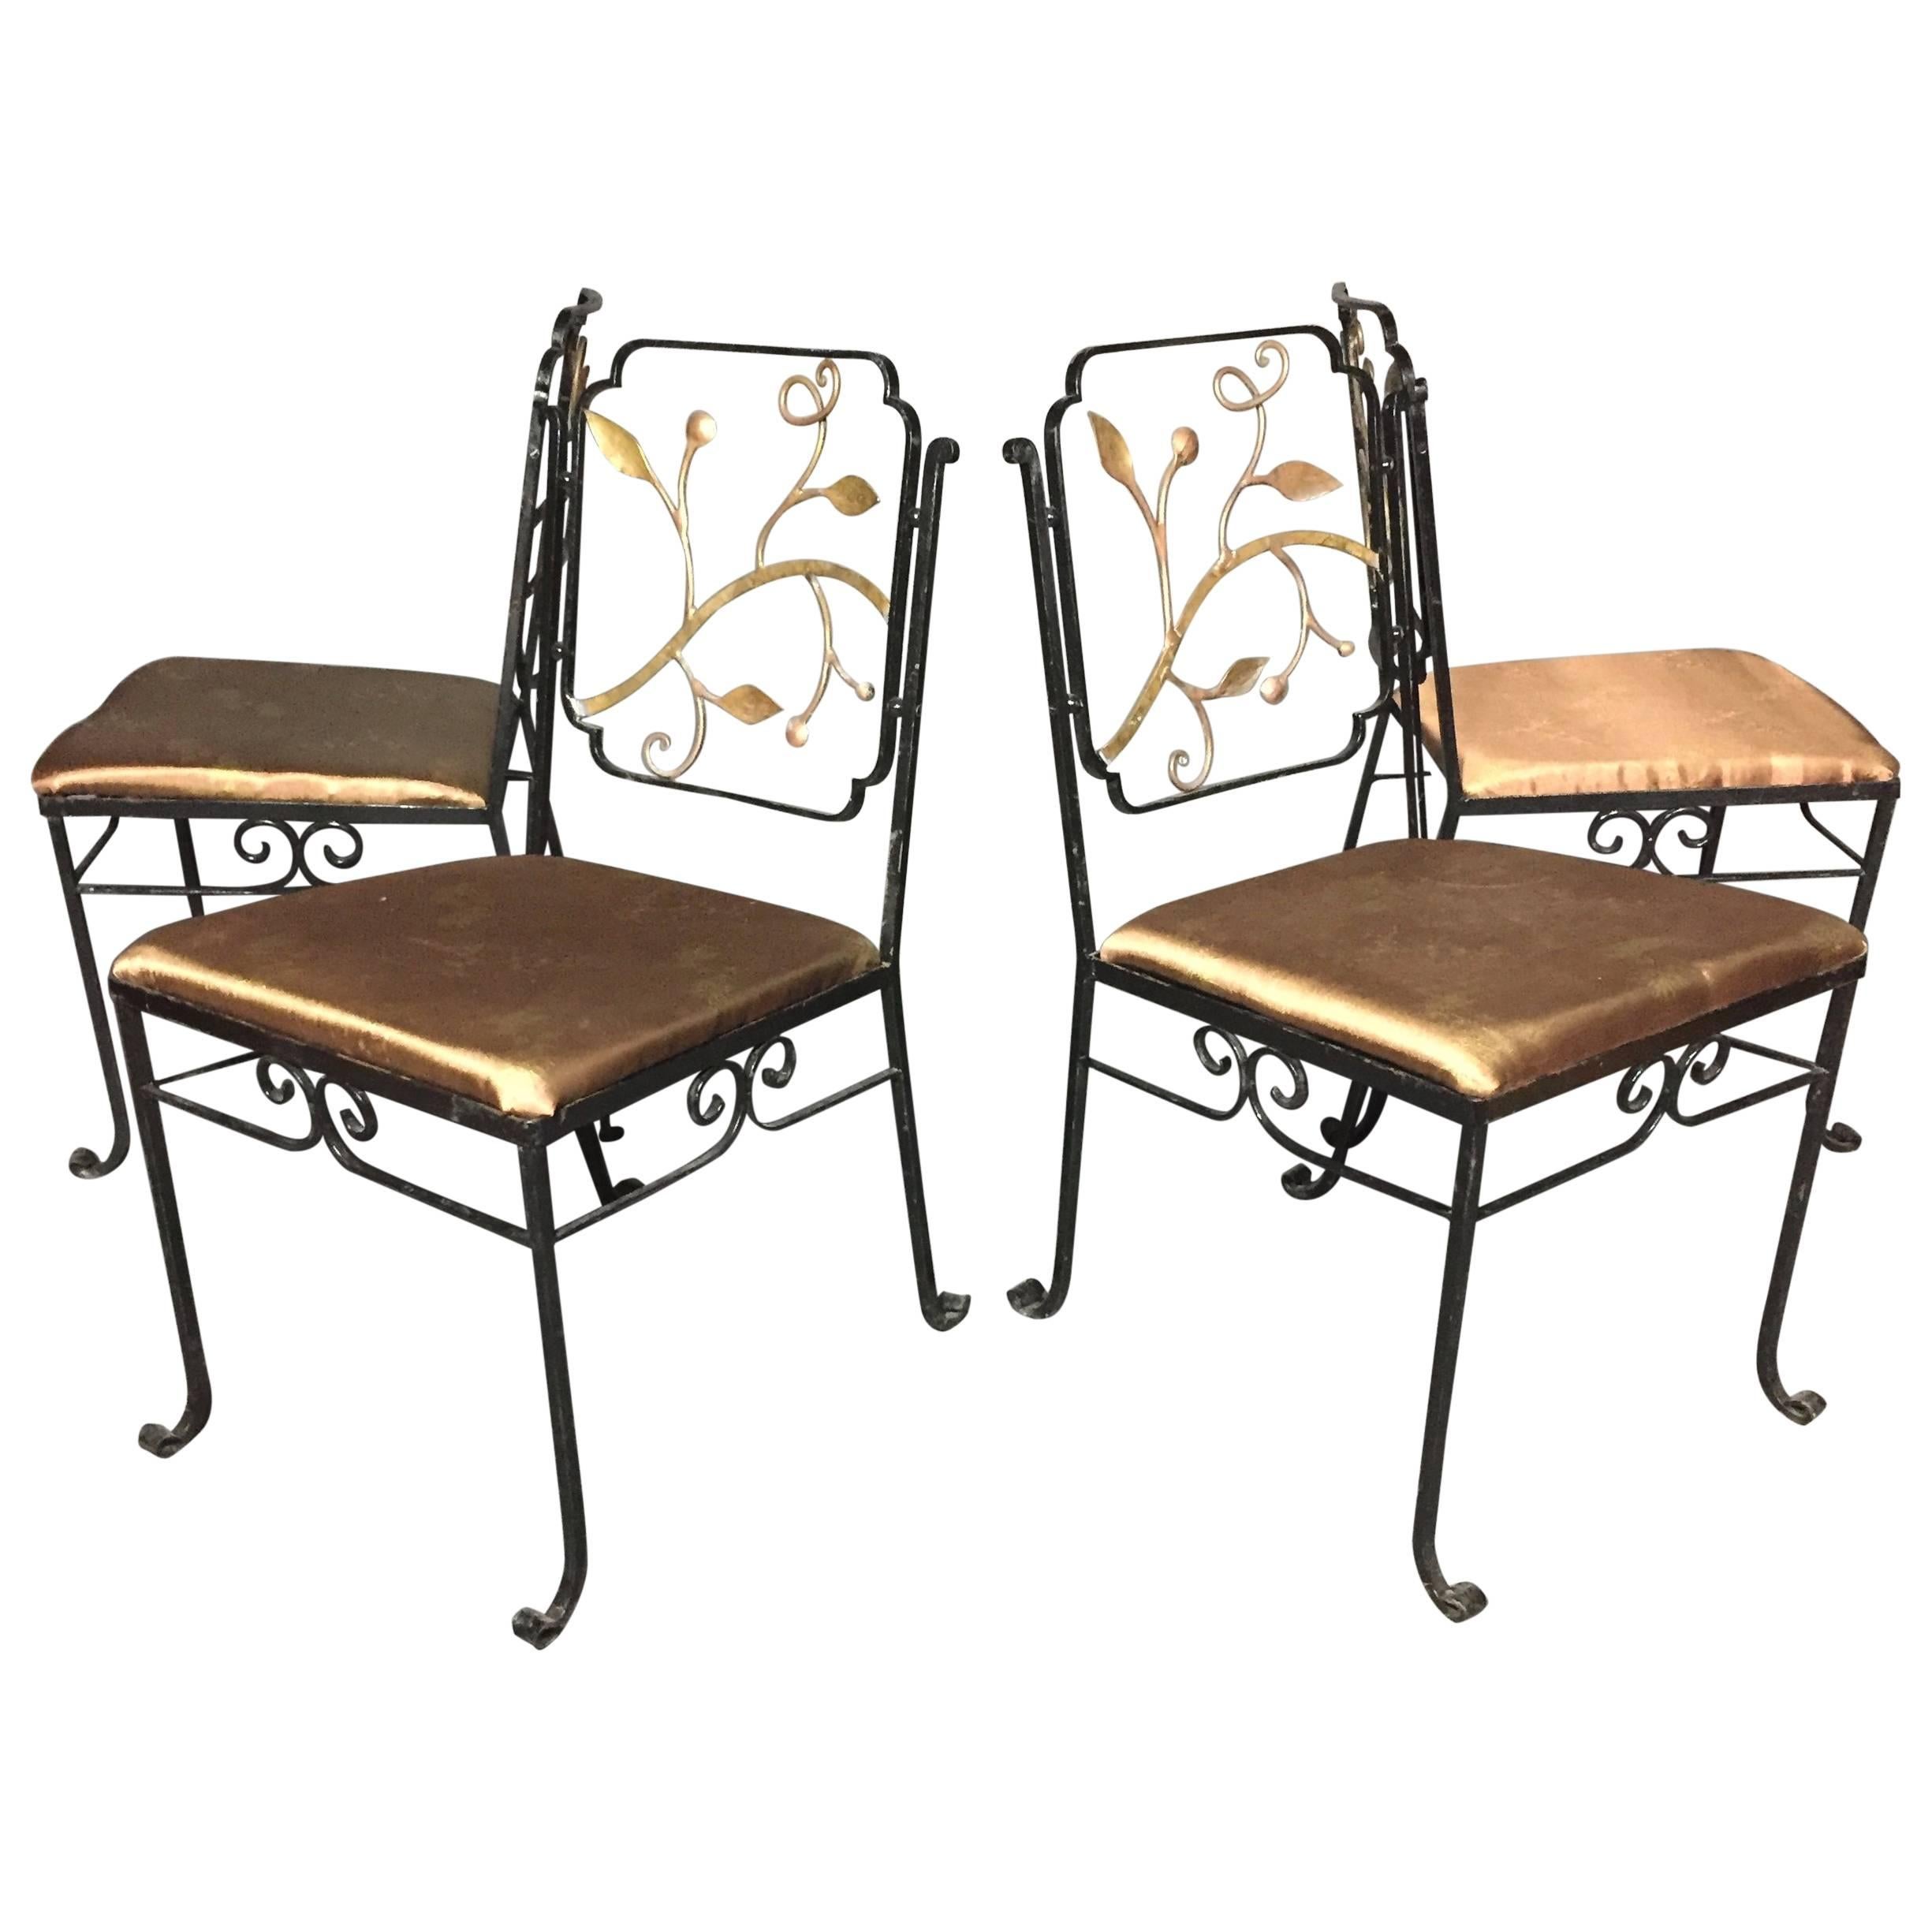 1920s Bronze and Iron Garden Chairs Attributed to Florentine Craft Studio